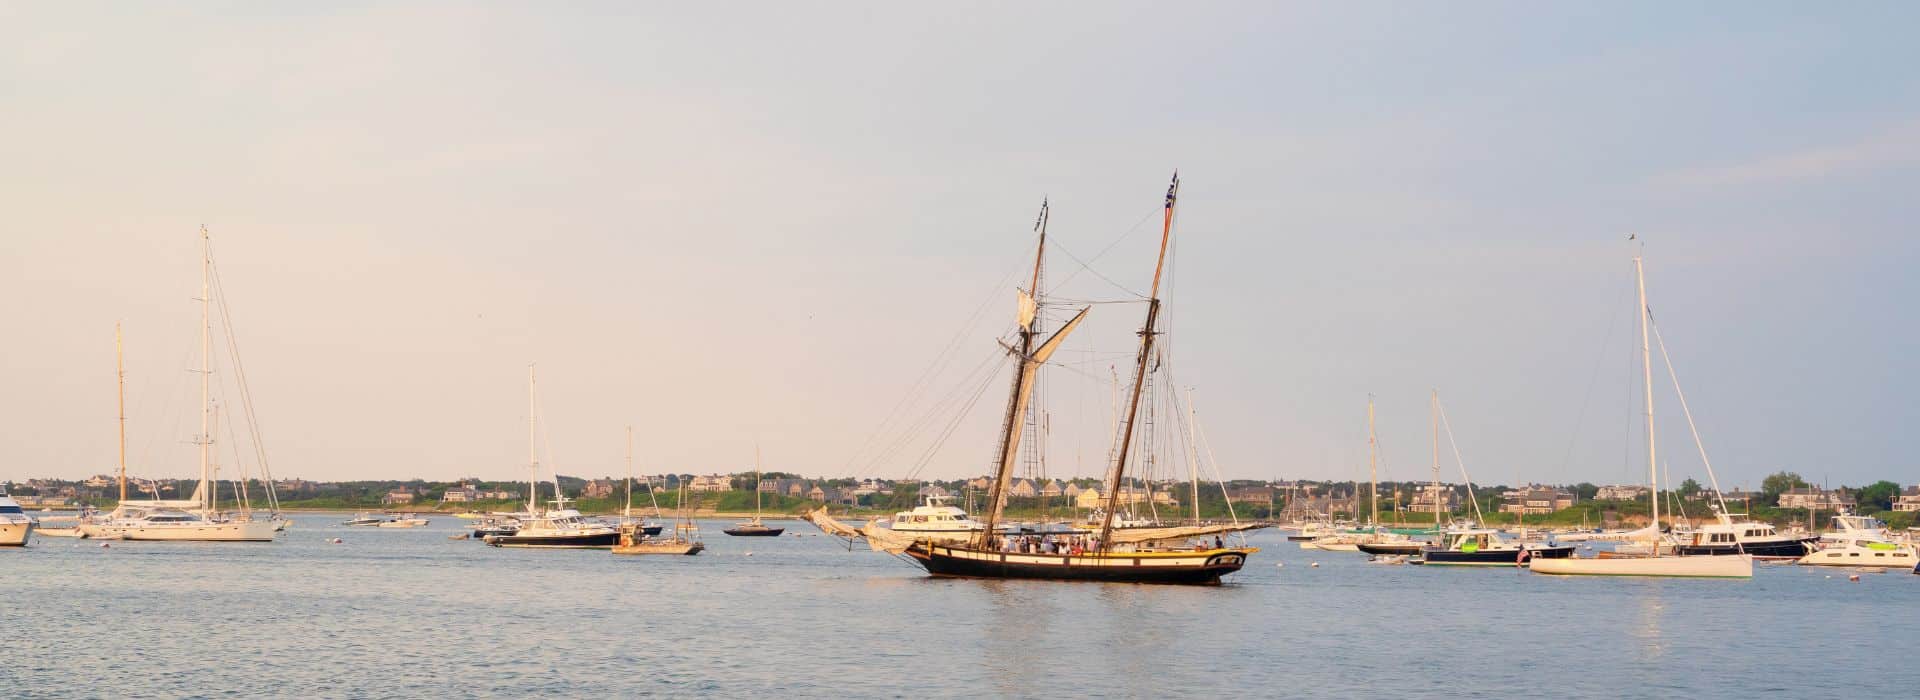 Sailboats in a Nantucket harbor